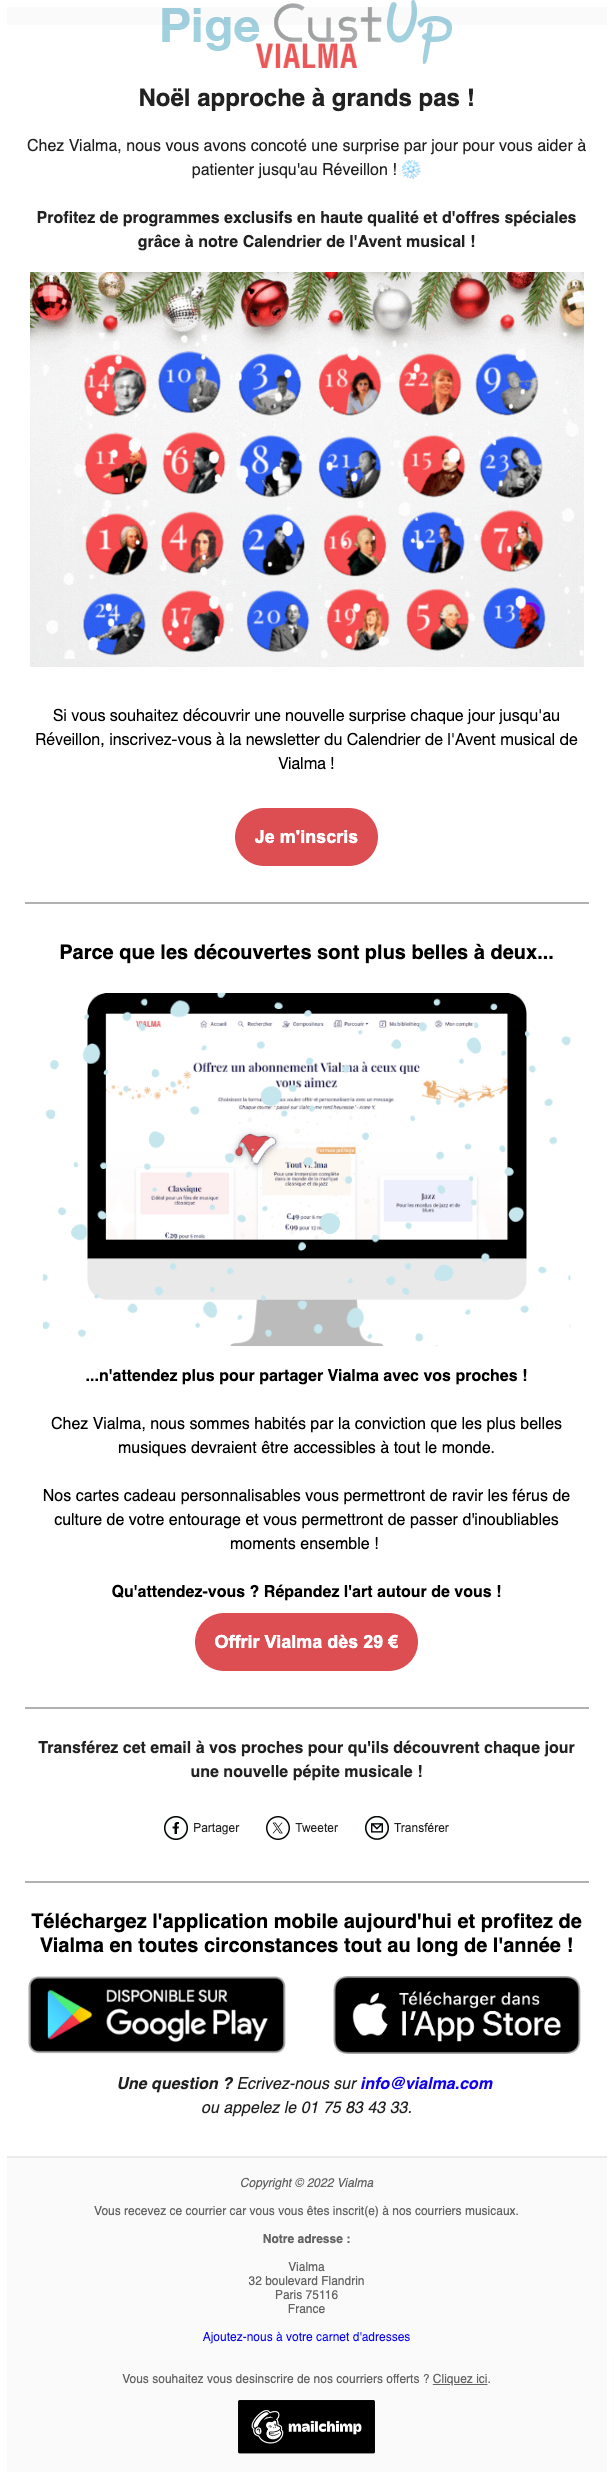 Exemple de Type de media  e-mailing - Vialma - Marketing relationnel - Calendaire (Noël, St valentin, Vœux, …) - Newsletter